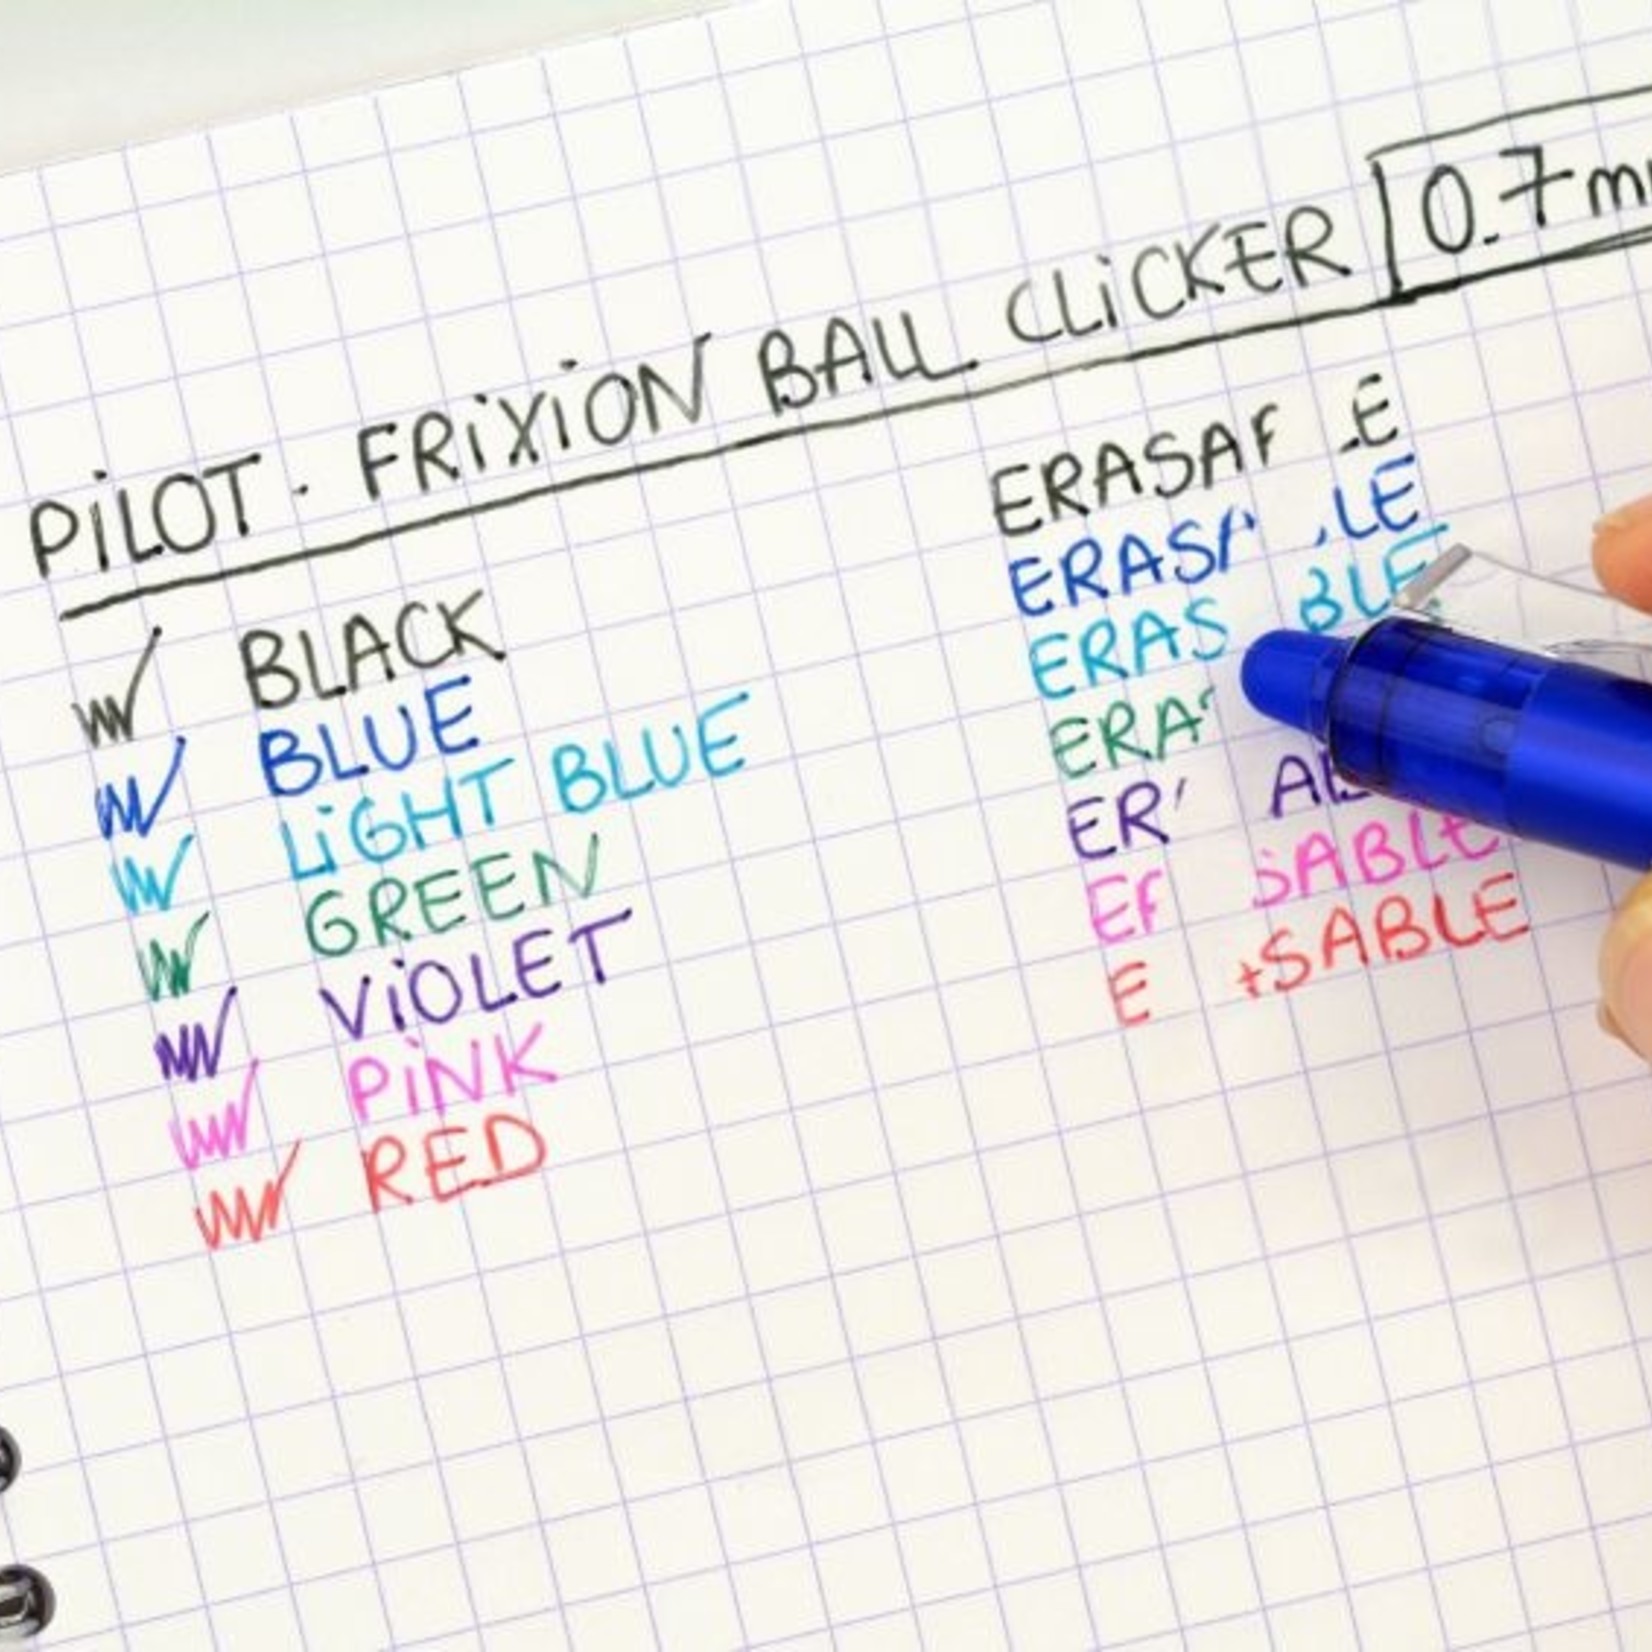 PILOT FRIXION BALL CLICKER ERASABLE INK PEN FINE 0.7MM BLUE BLACK